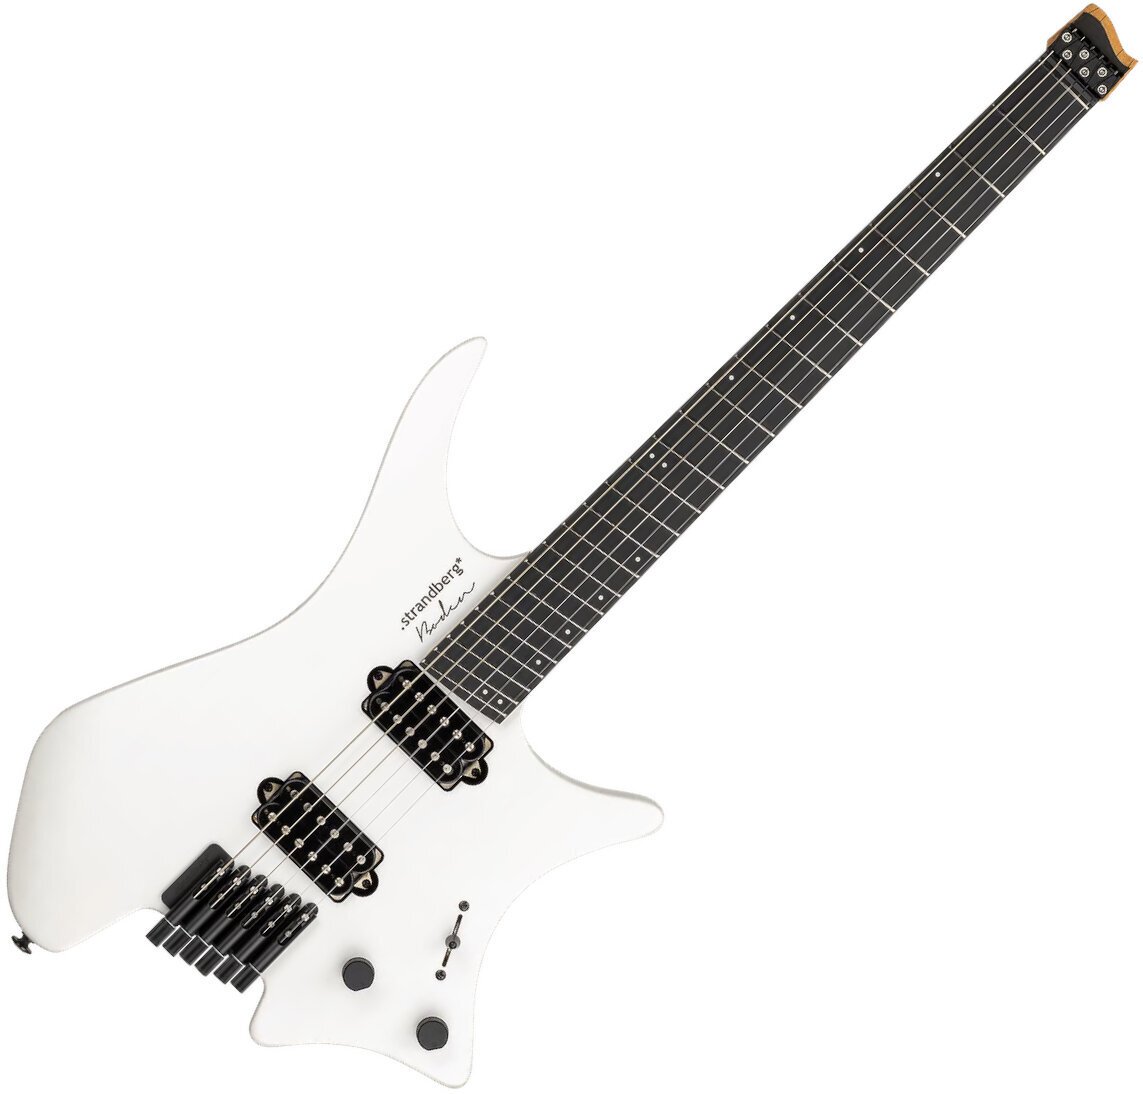 Headless Gitarre Strandberg Boden Metal NX 6 White Granite